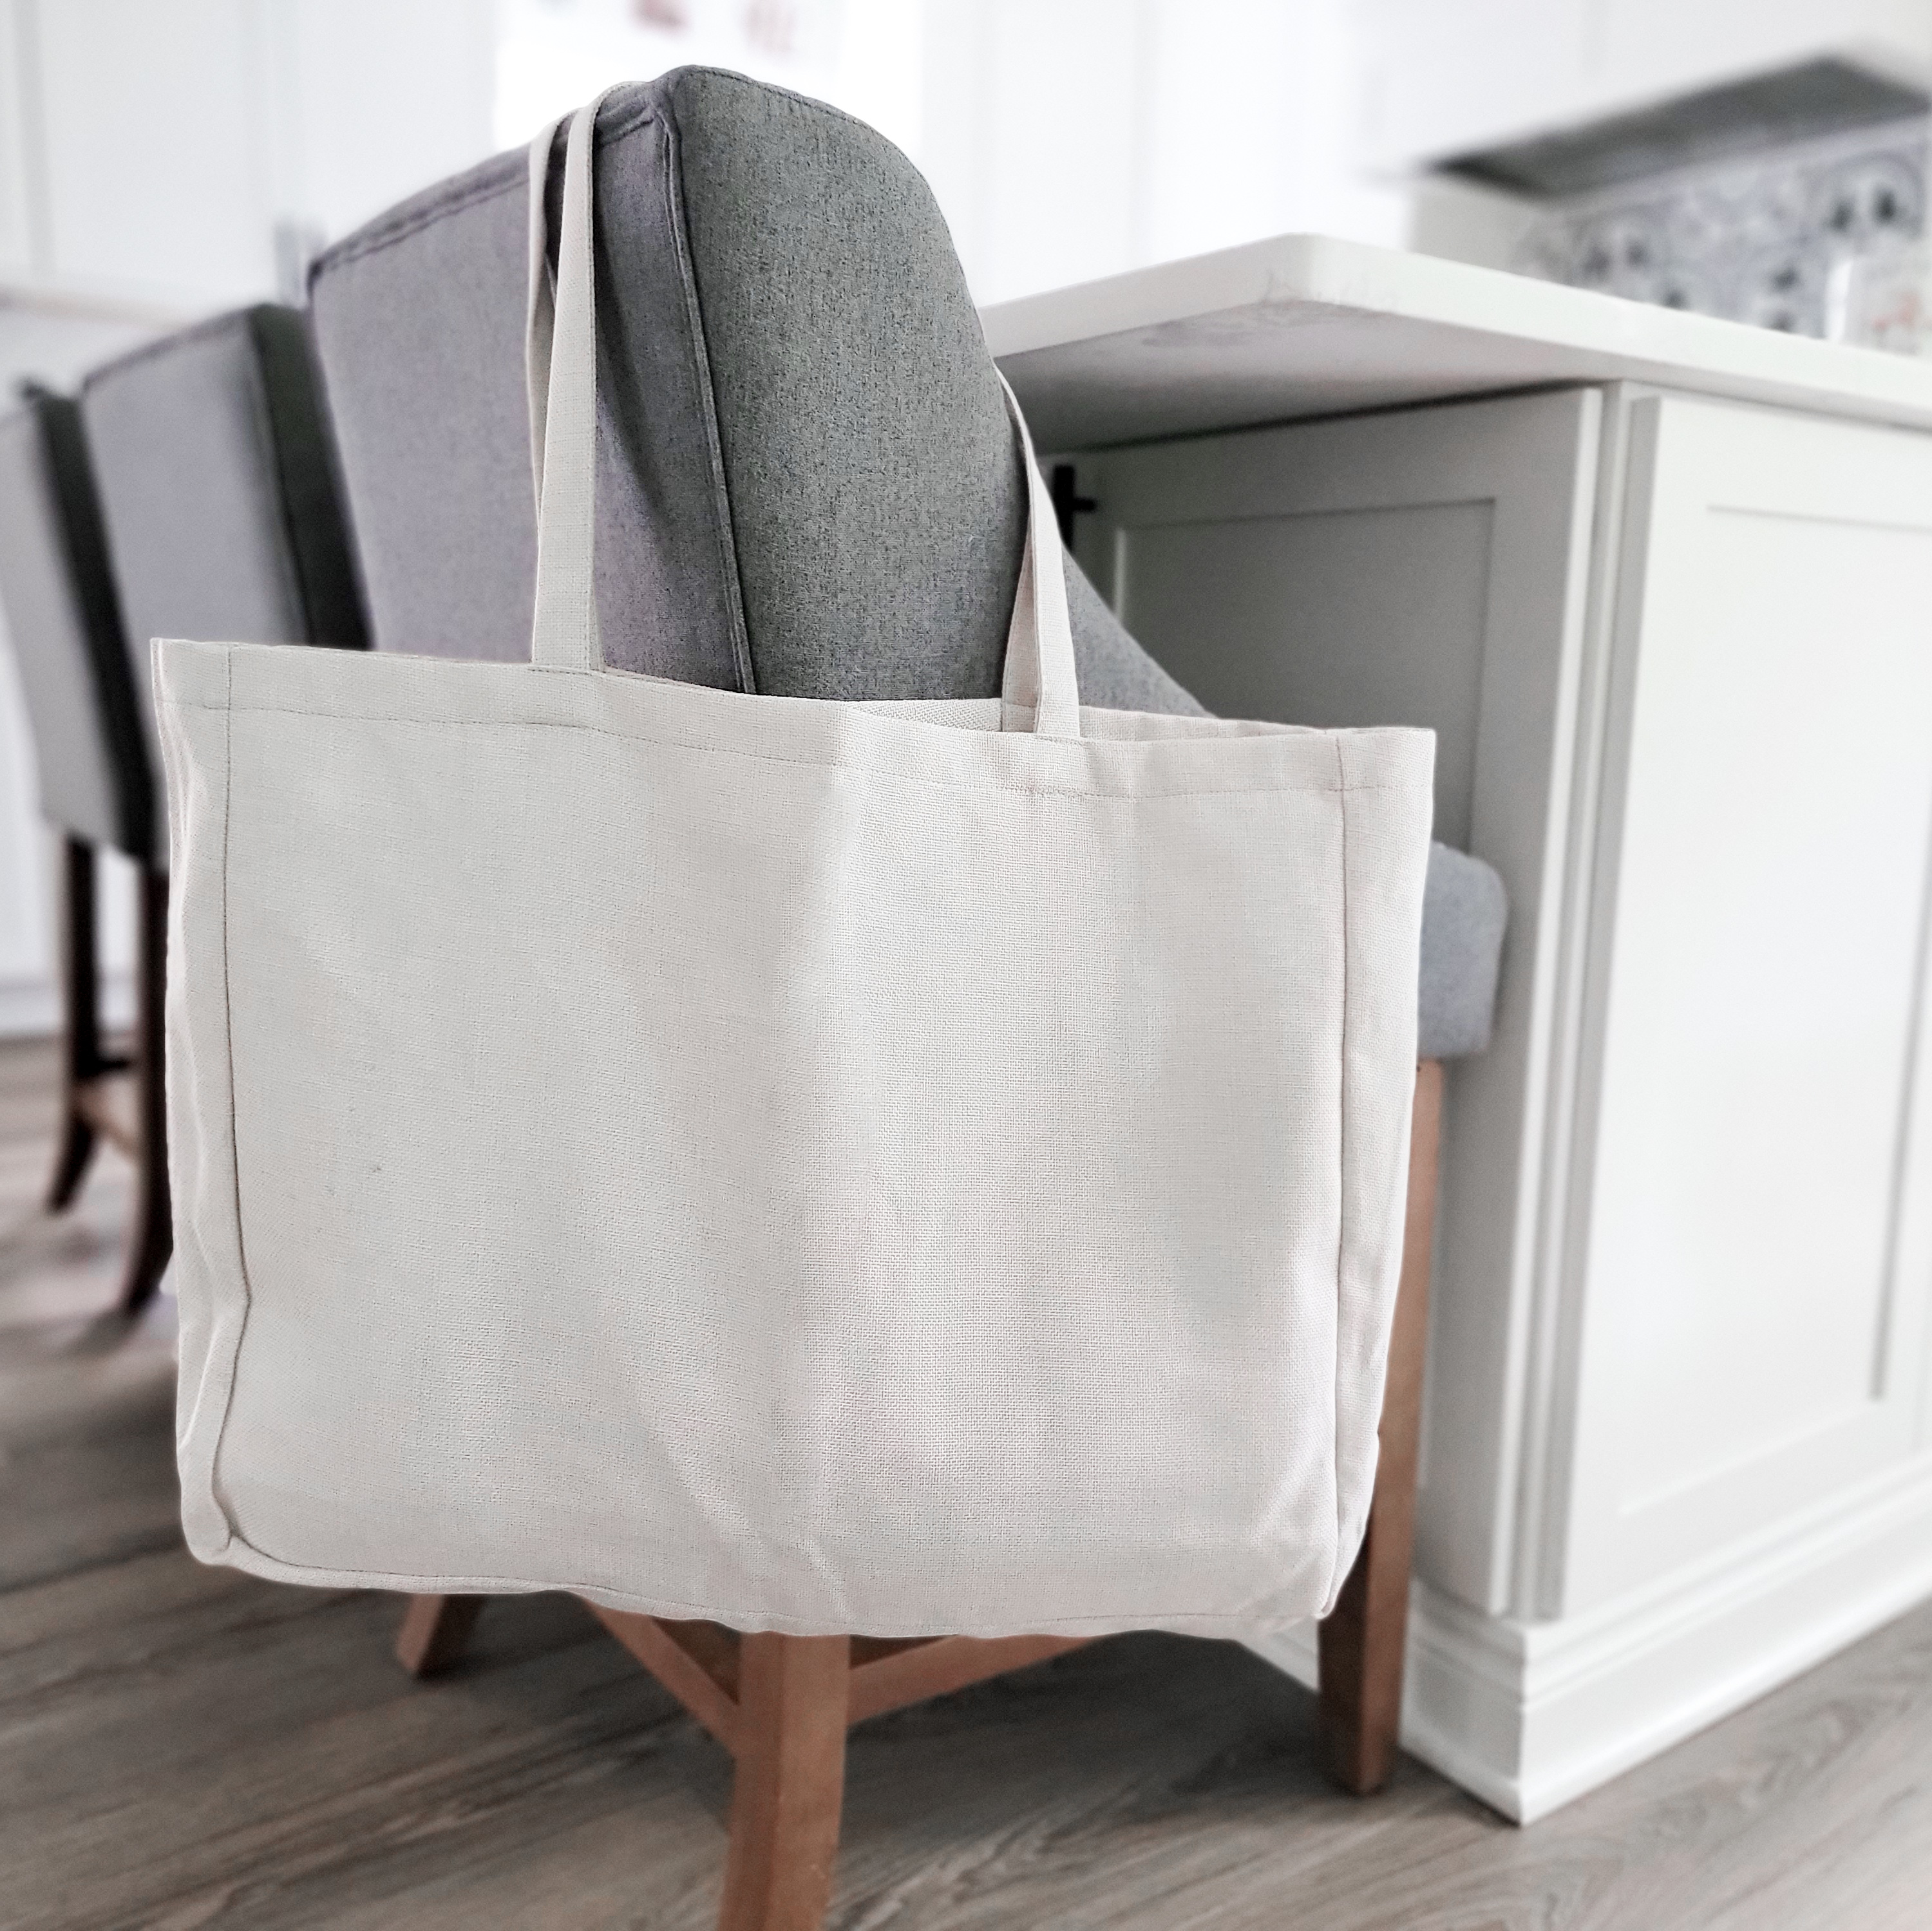 Sublimation Blank Cotton Linen Shopping Bag Tote Bag